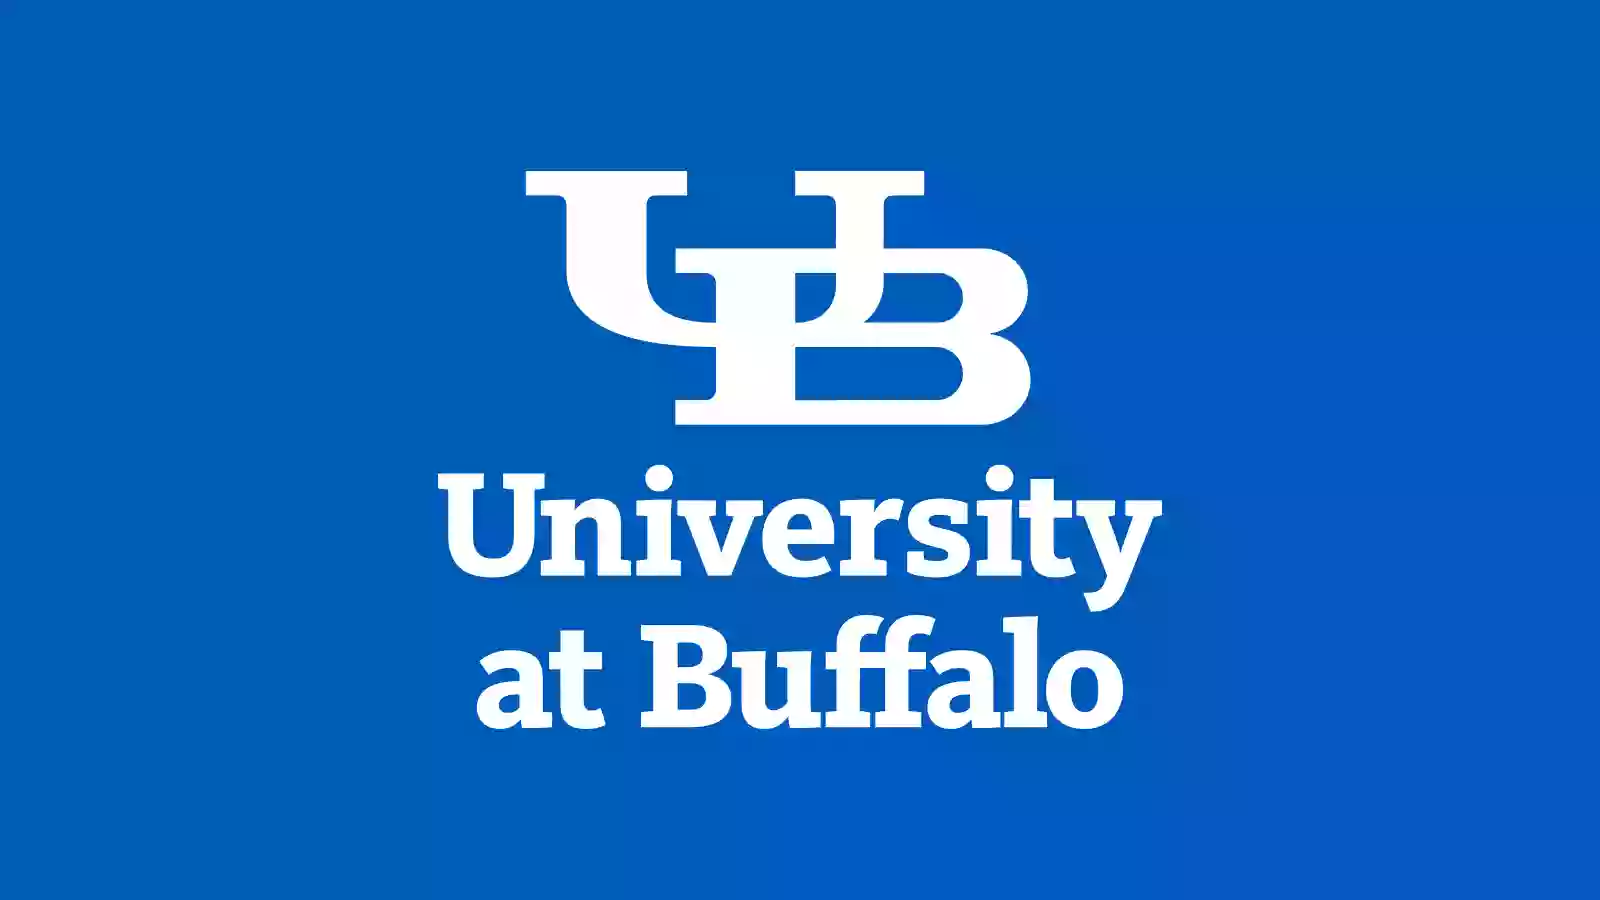 Eve Educational Opportunity Center - University at Buffalo